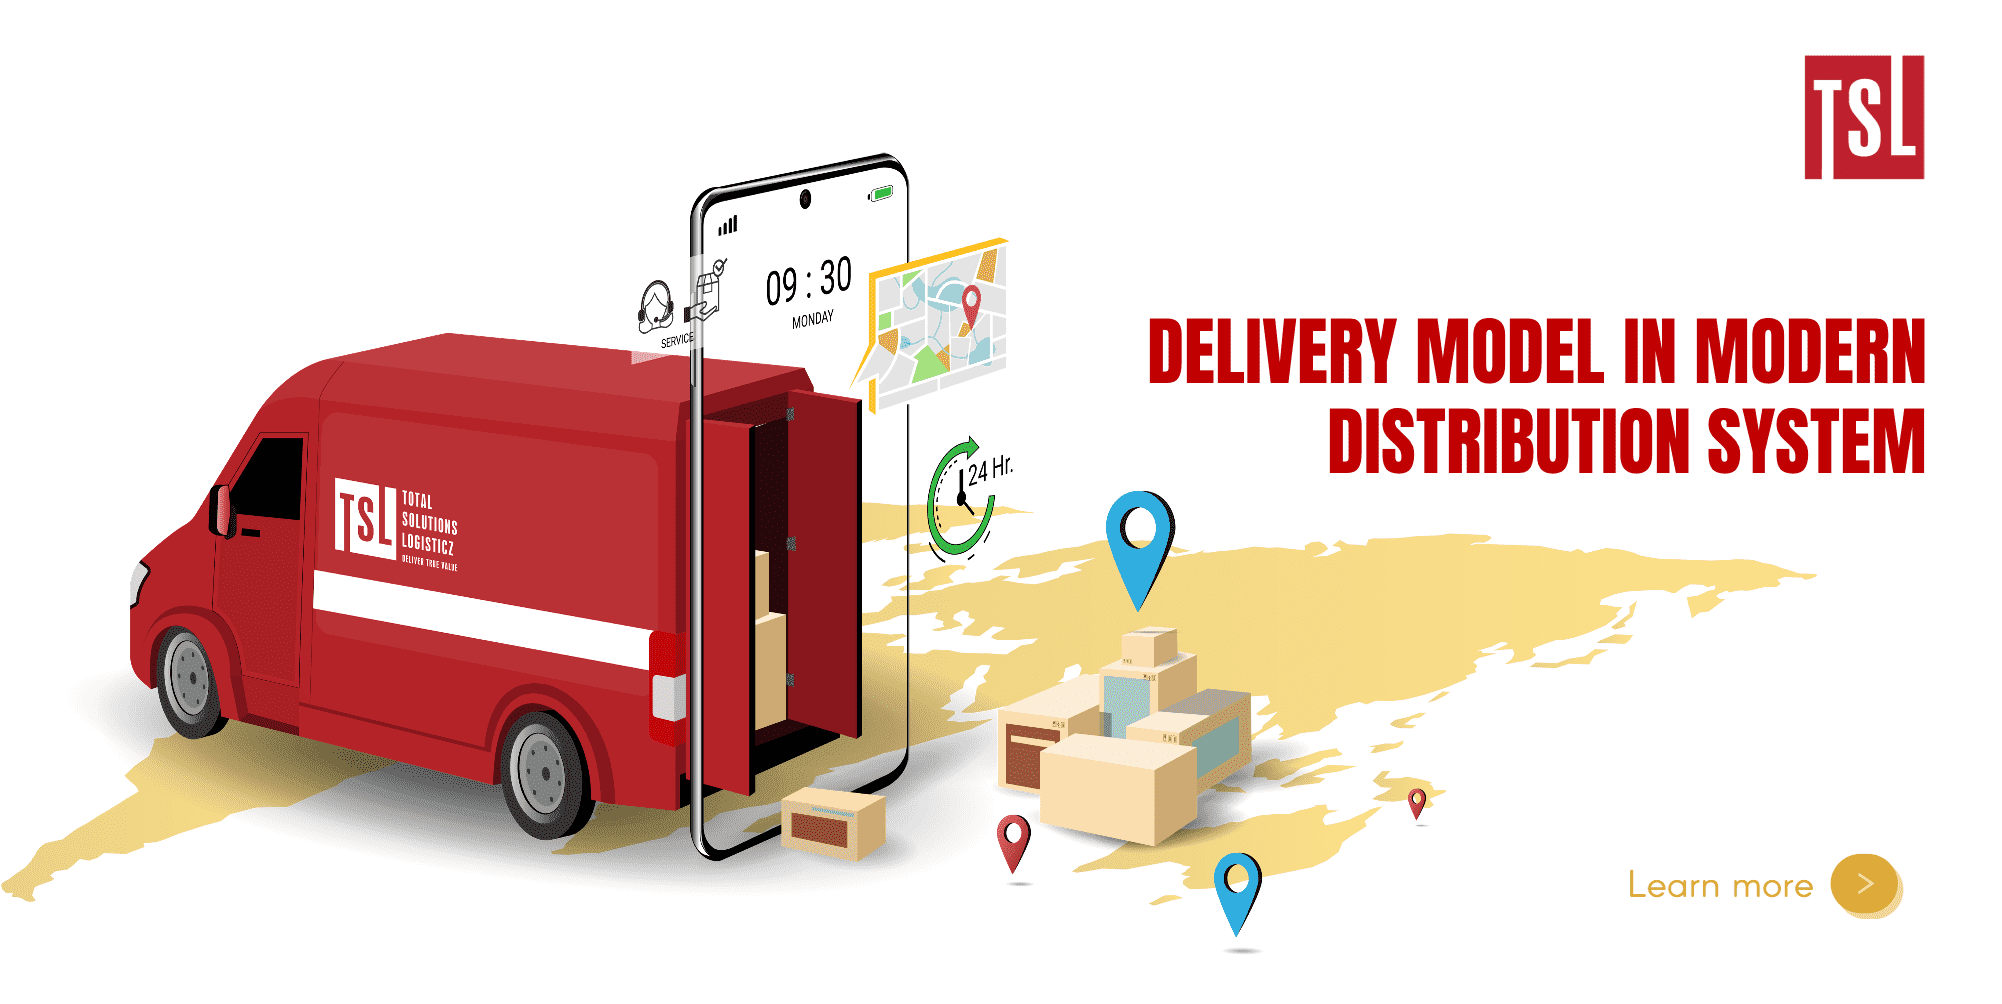 Delivery model in modern distribution system